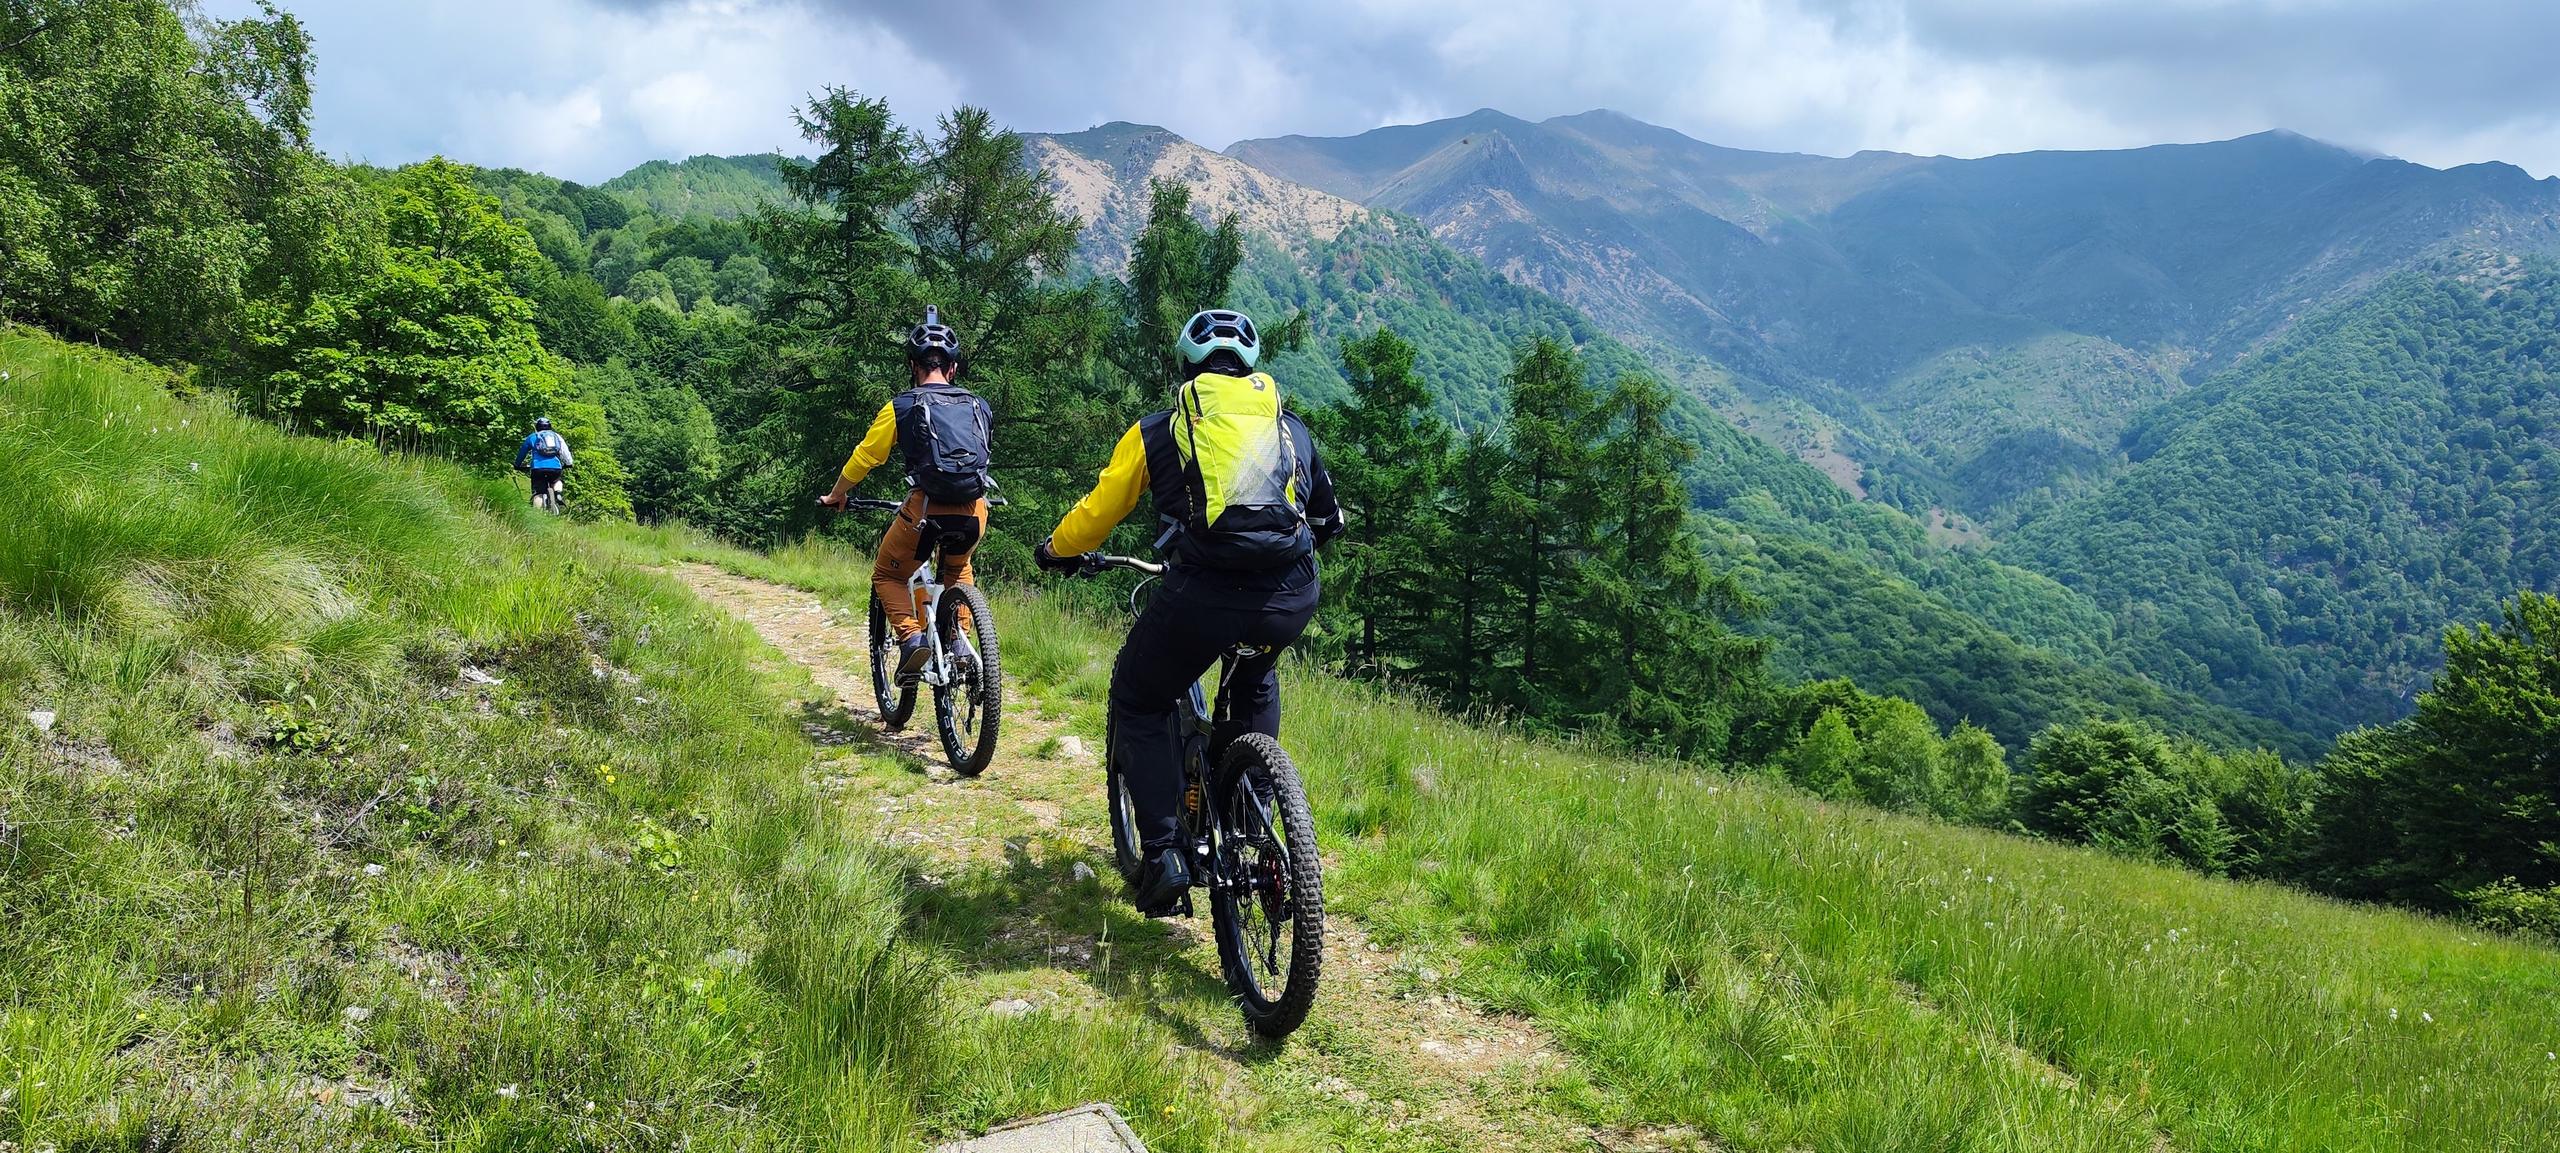 Trekking in Piemonte, Gravel in Piemonte, Hiking, Mountain Bike, E-bike, Vercellese, Valsesia, Biellese, Monferrato